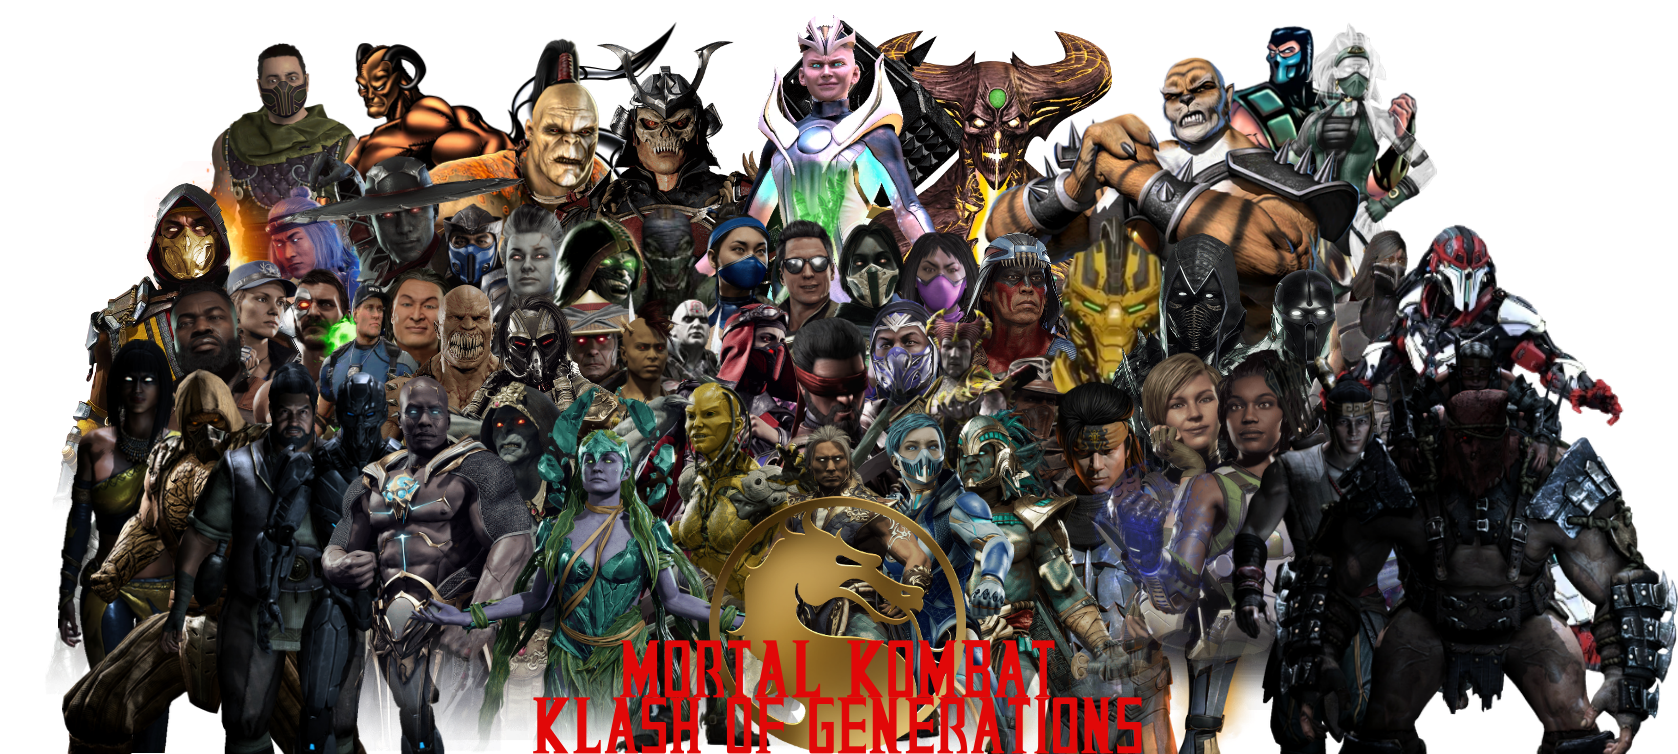 Mortal Kombat Characters by Dinorex50 on DeviantArt